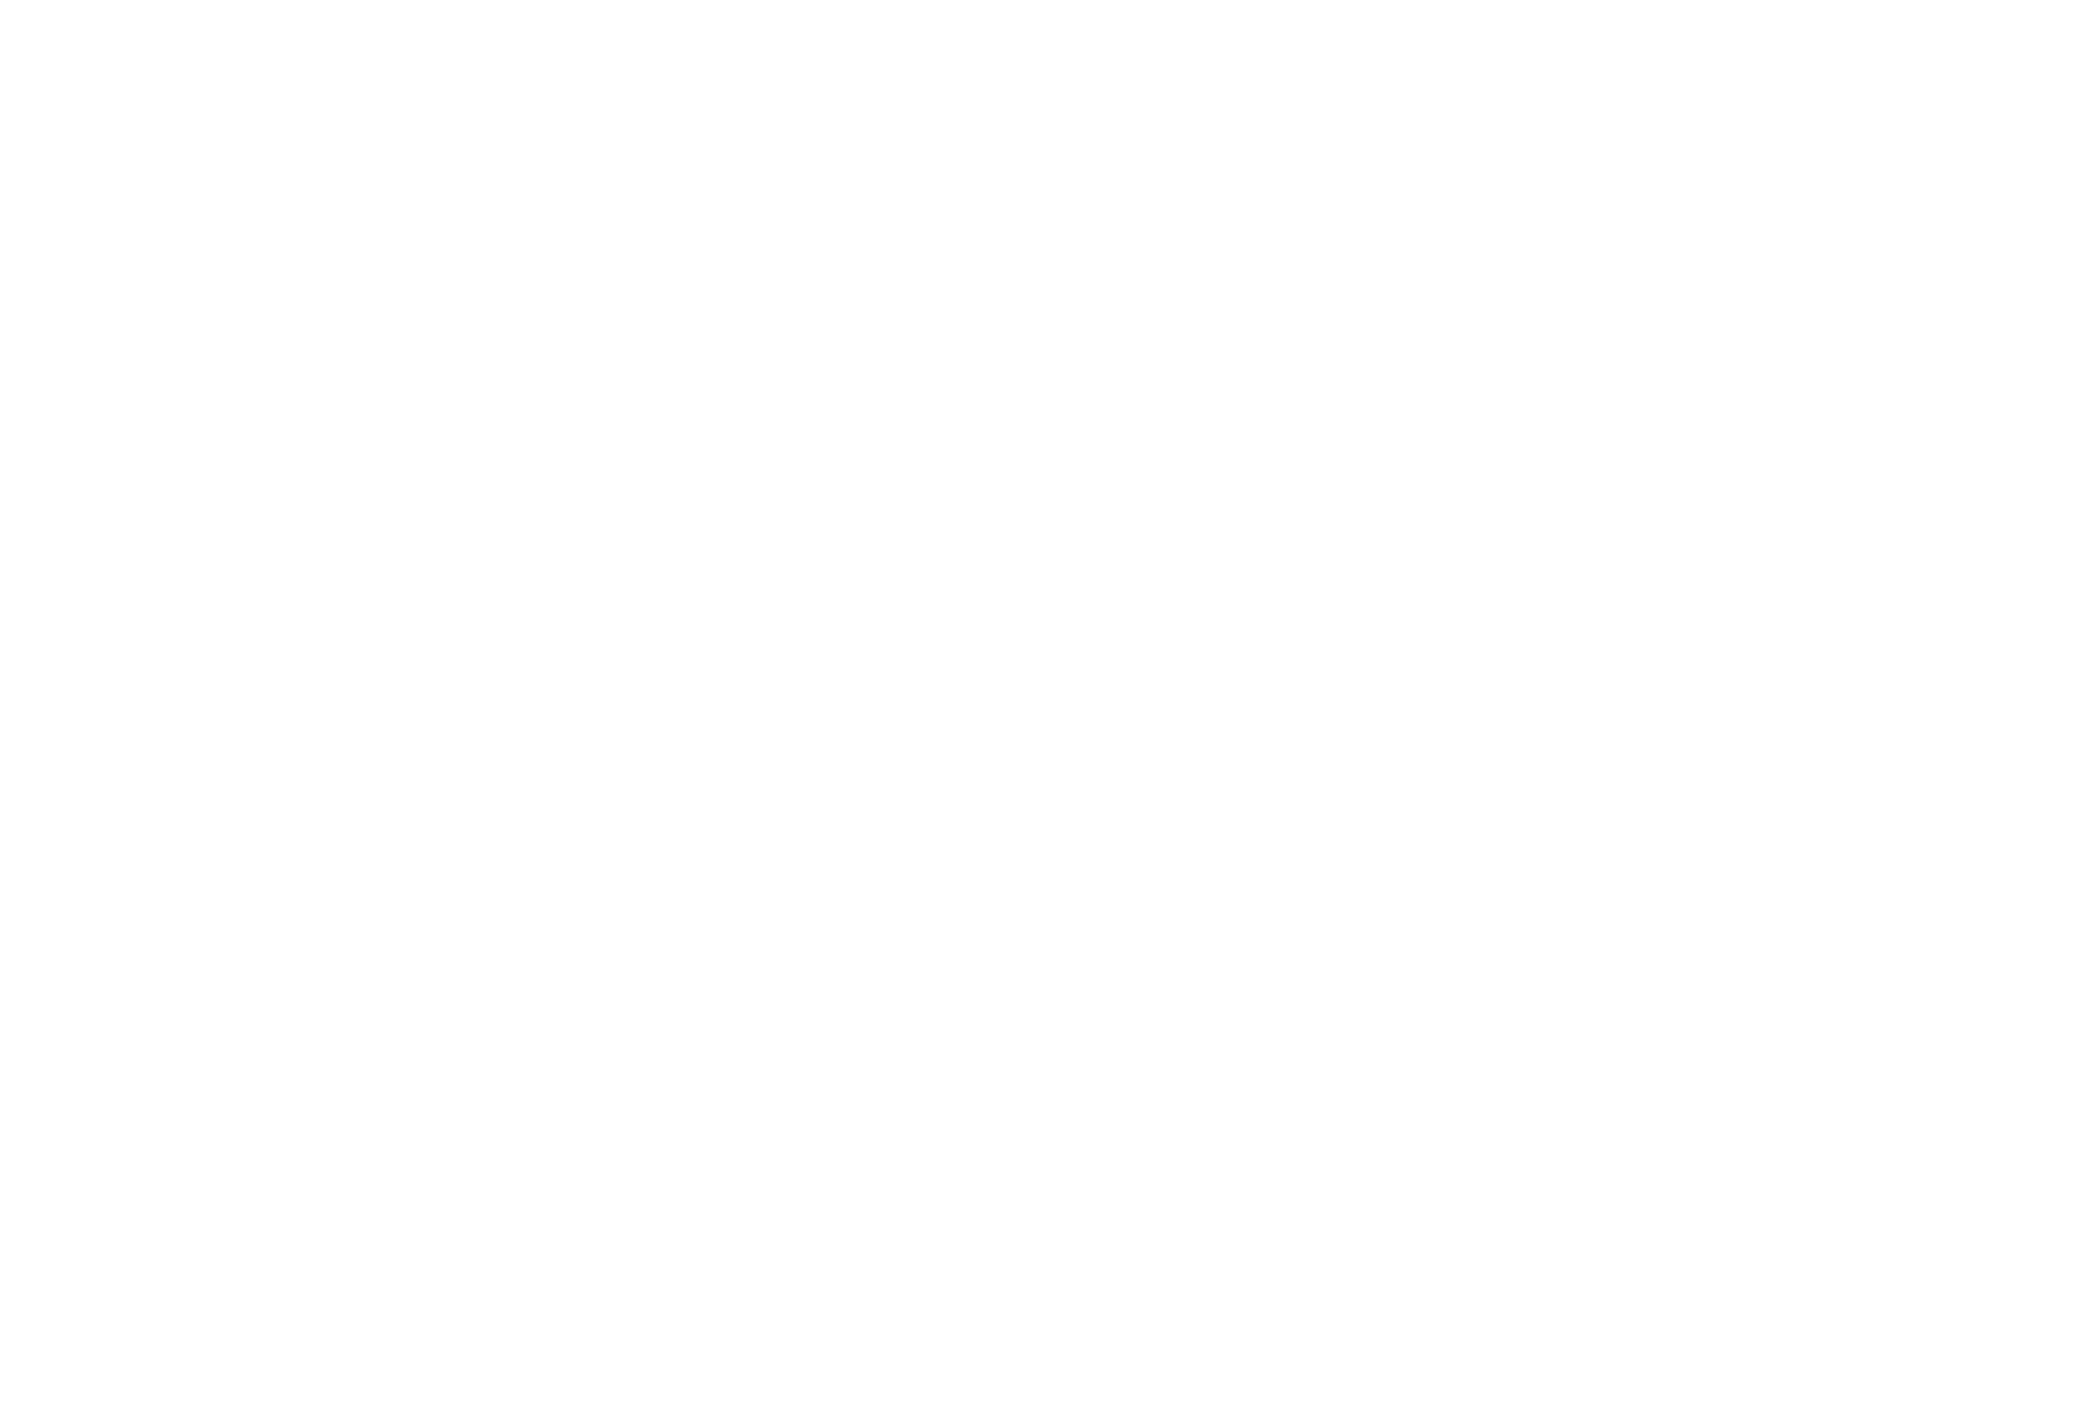 Kurt Connor Photography